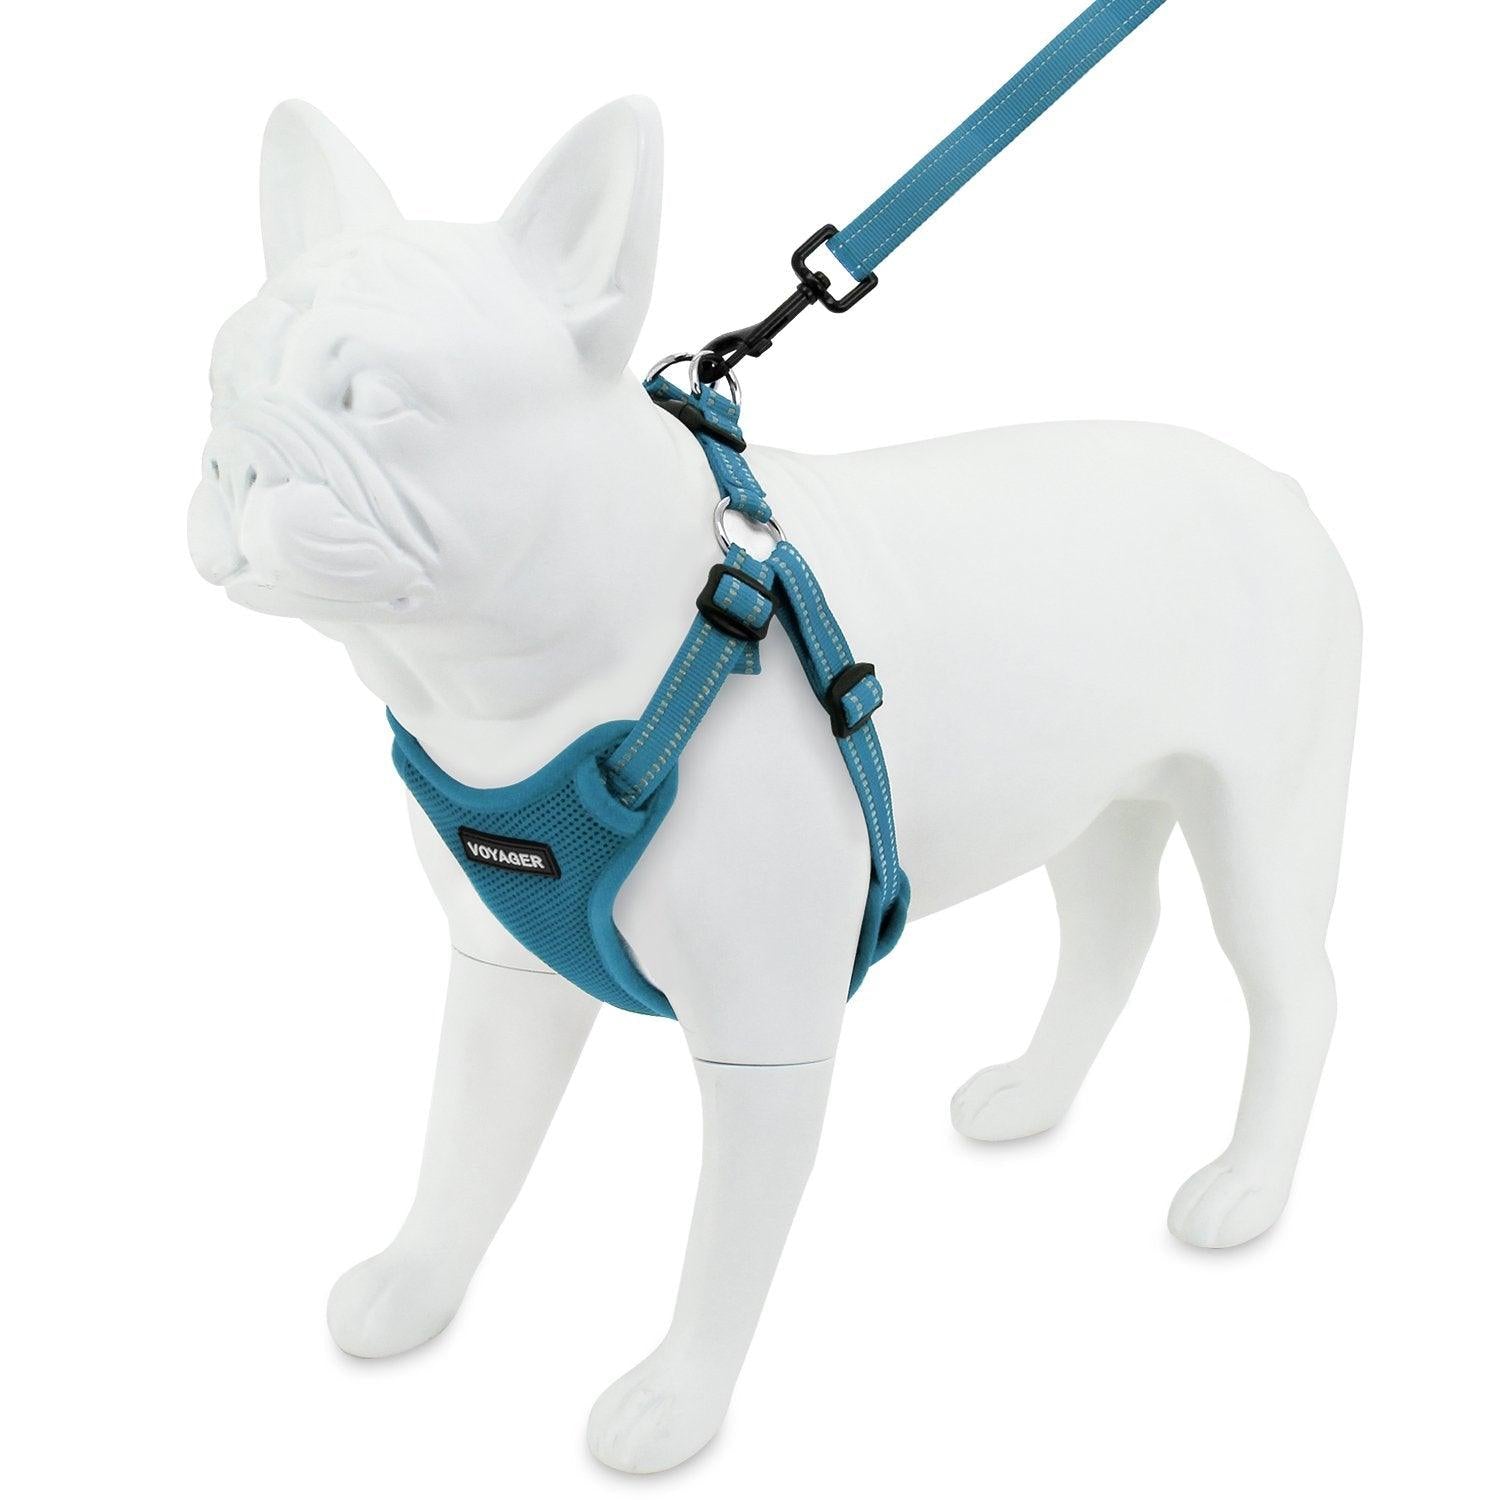 Voyager Step-In Flex Adjustable Harness & Leash Combo Set for Dogs -  VOYAGER Dog Harnesses